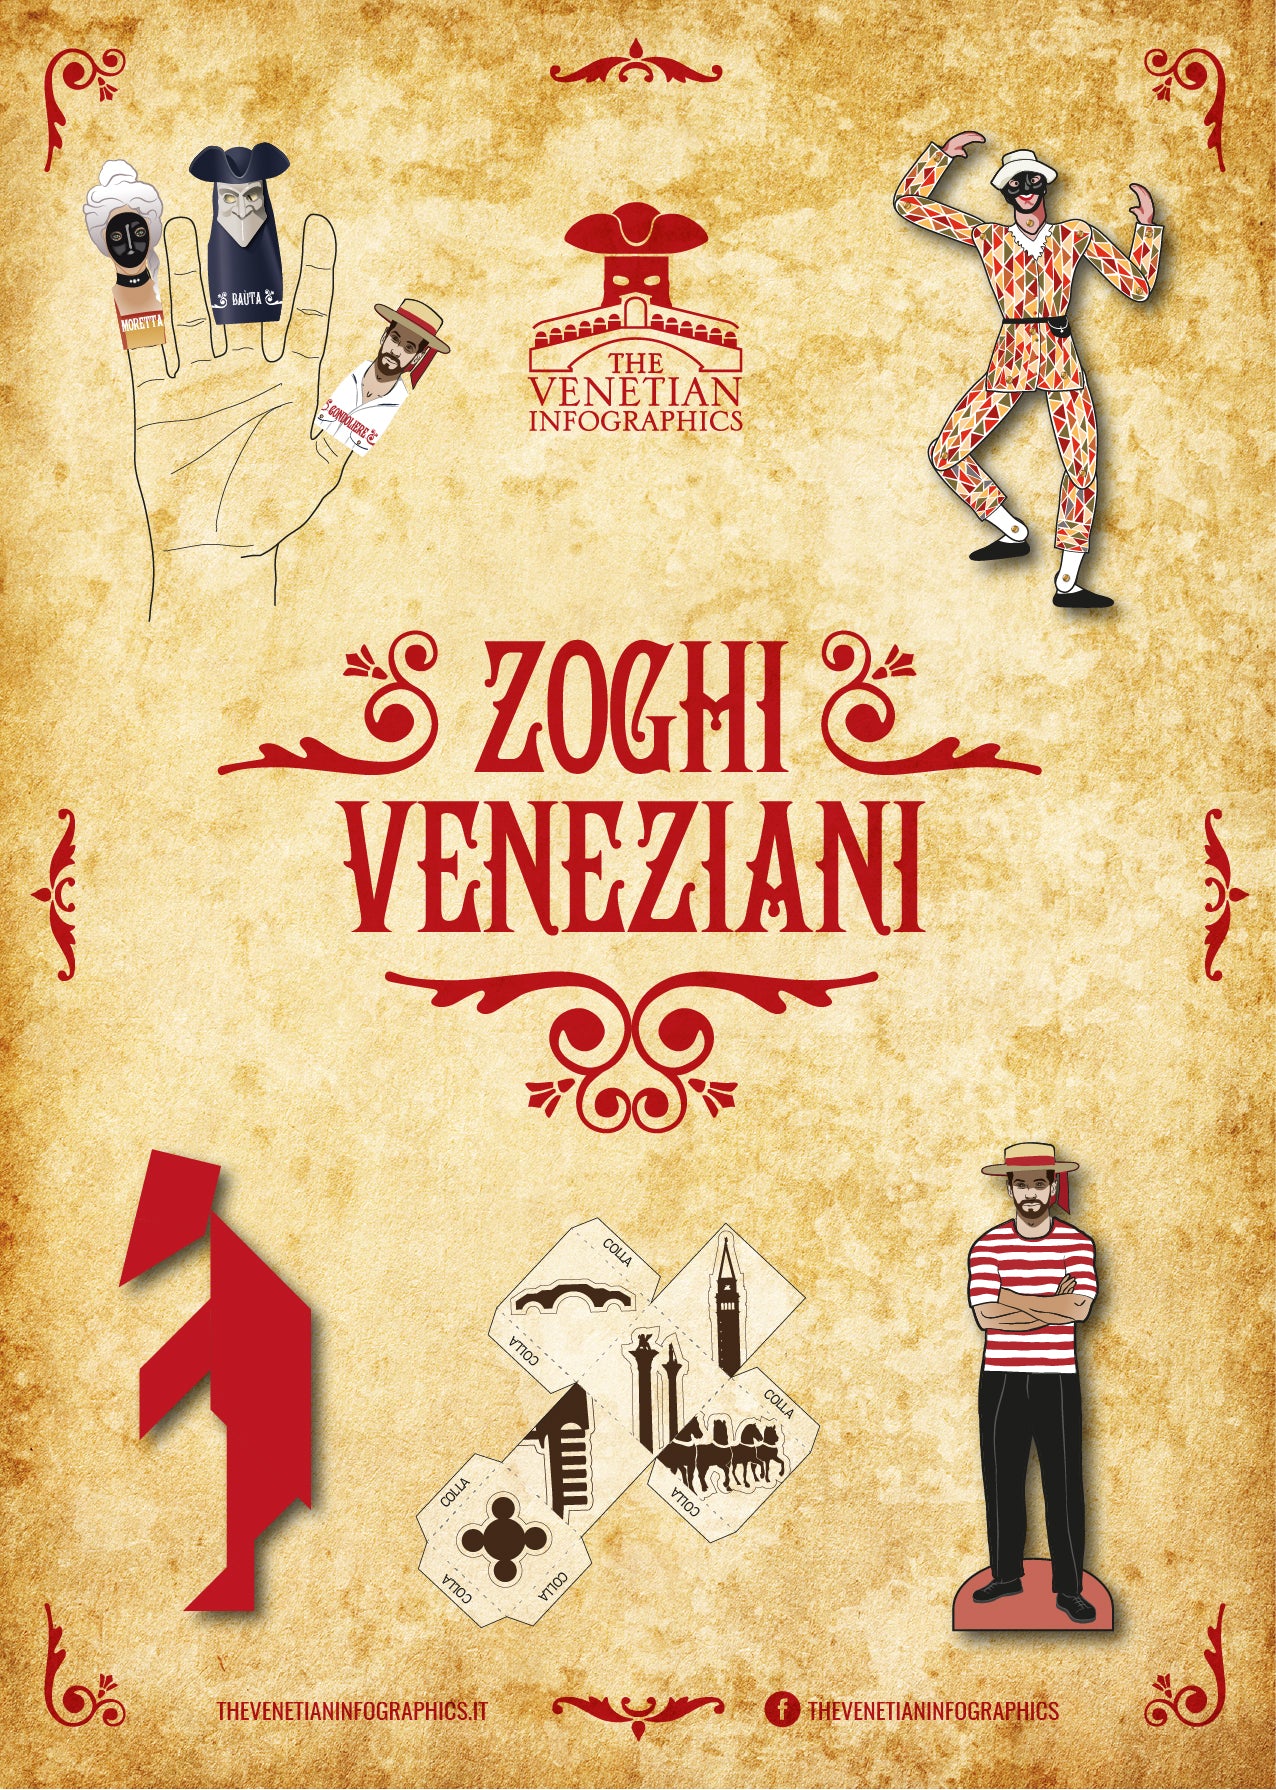 I Zoghi Veneziani